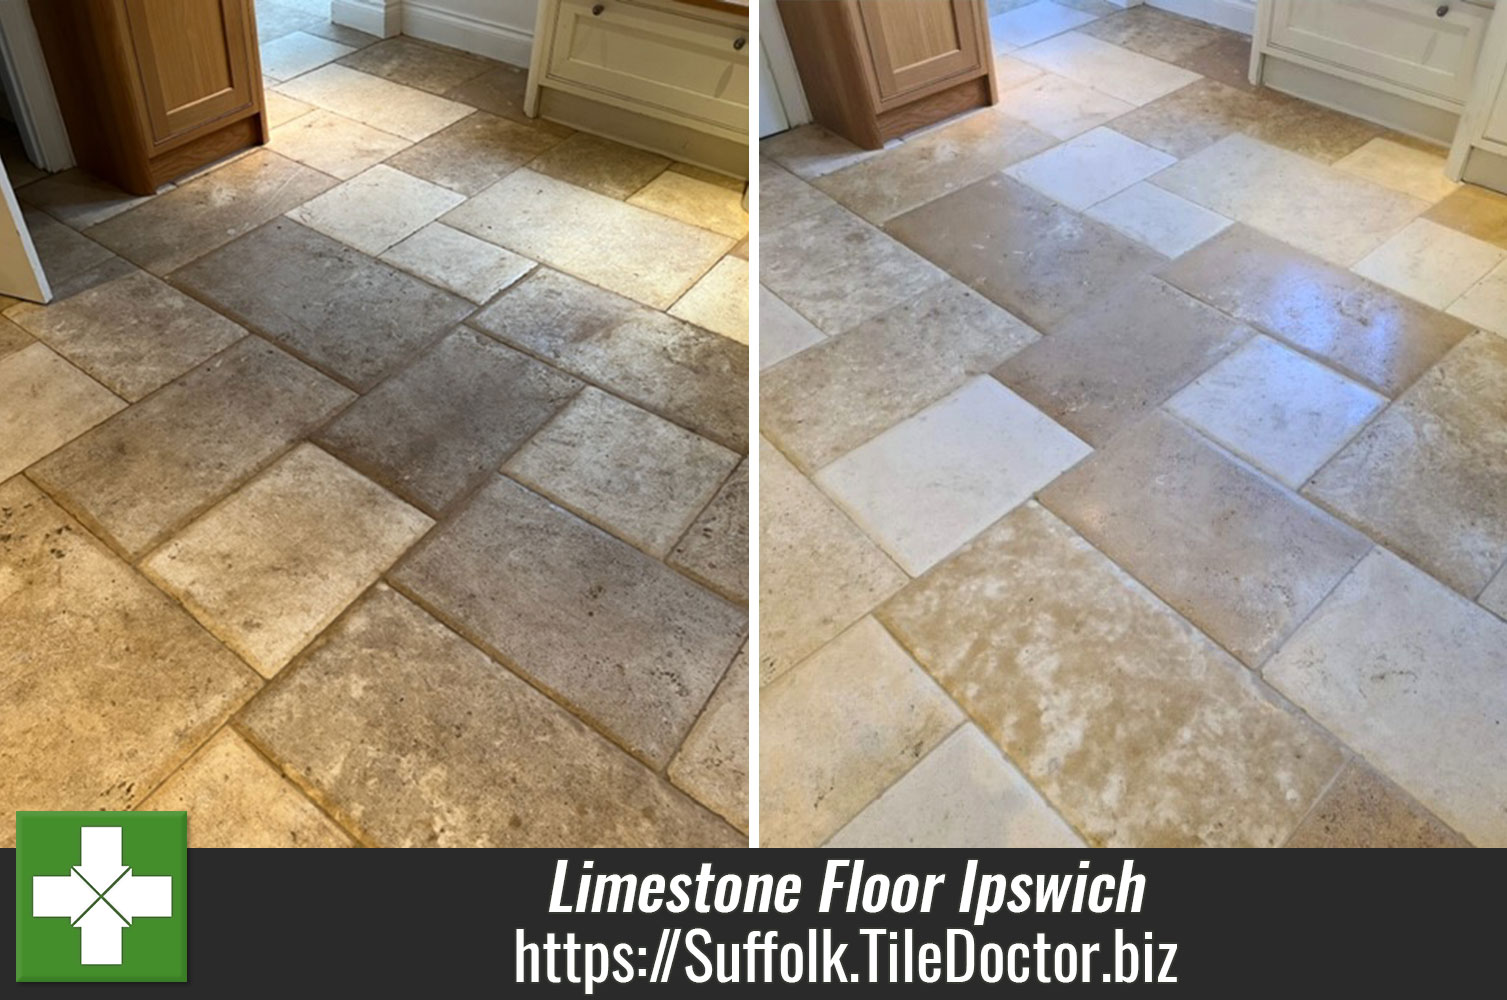 Limestone-Tiled-Kitchen-Floor-Renovated-in-Ipswich-Suffolk